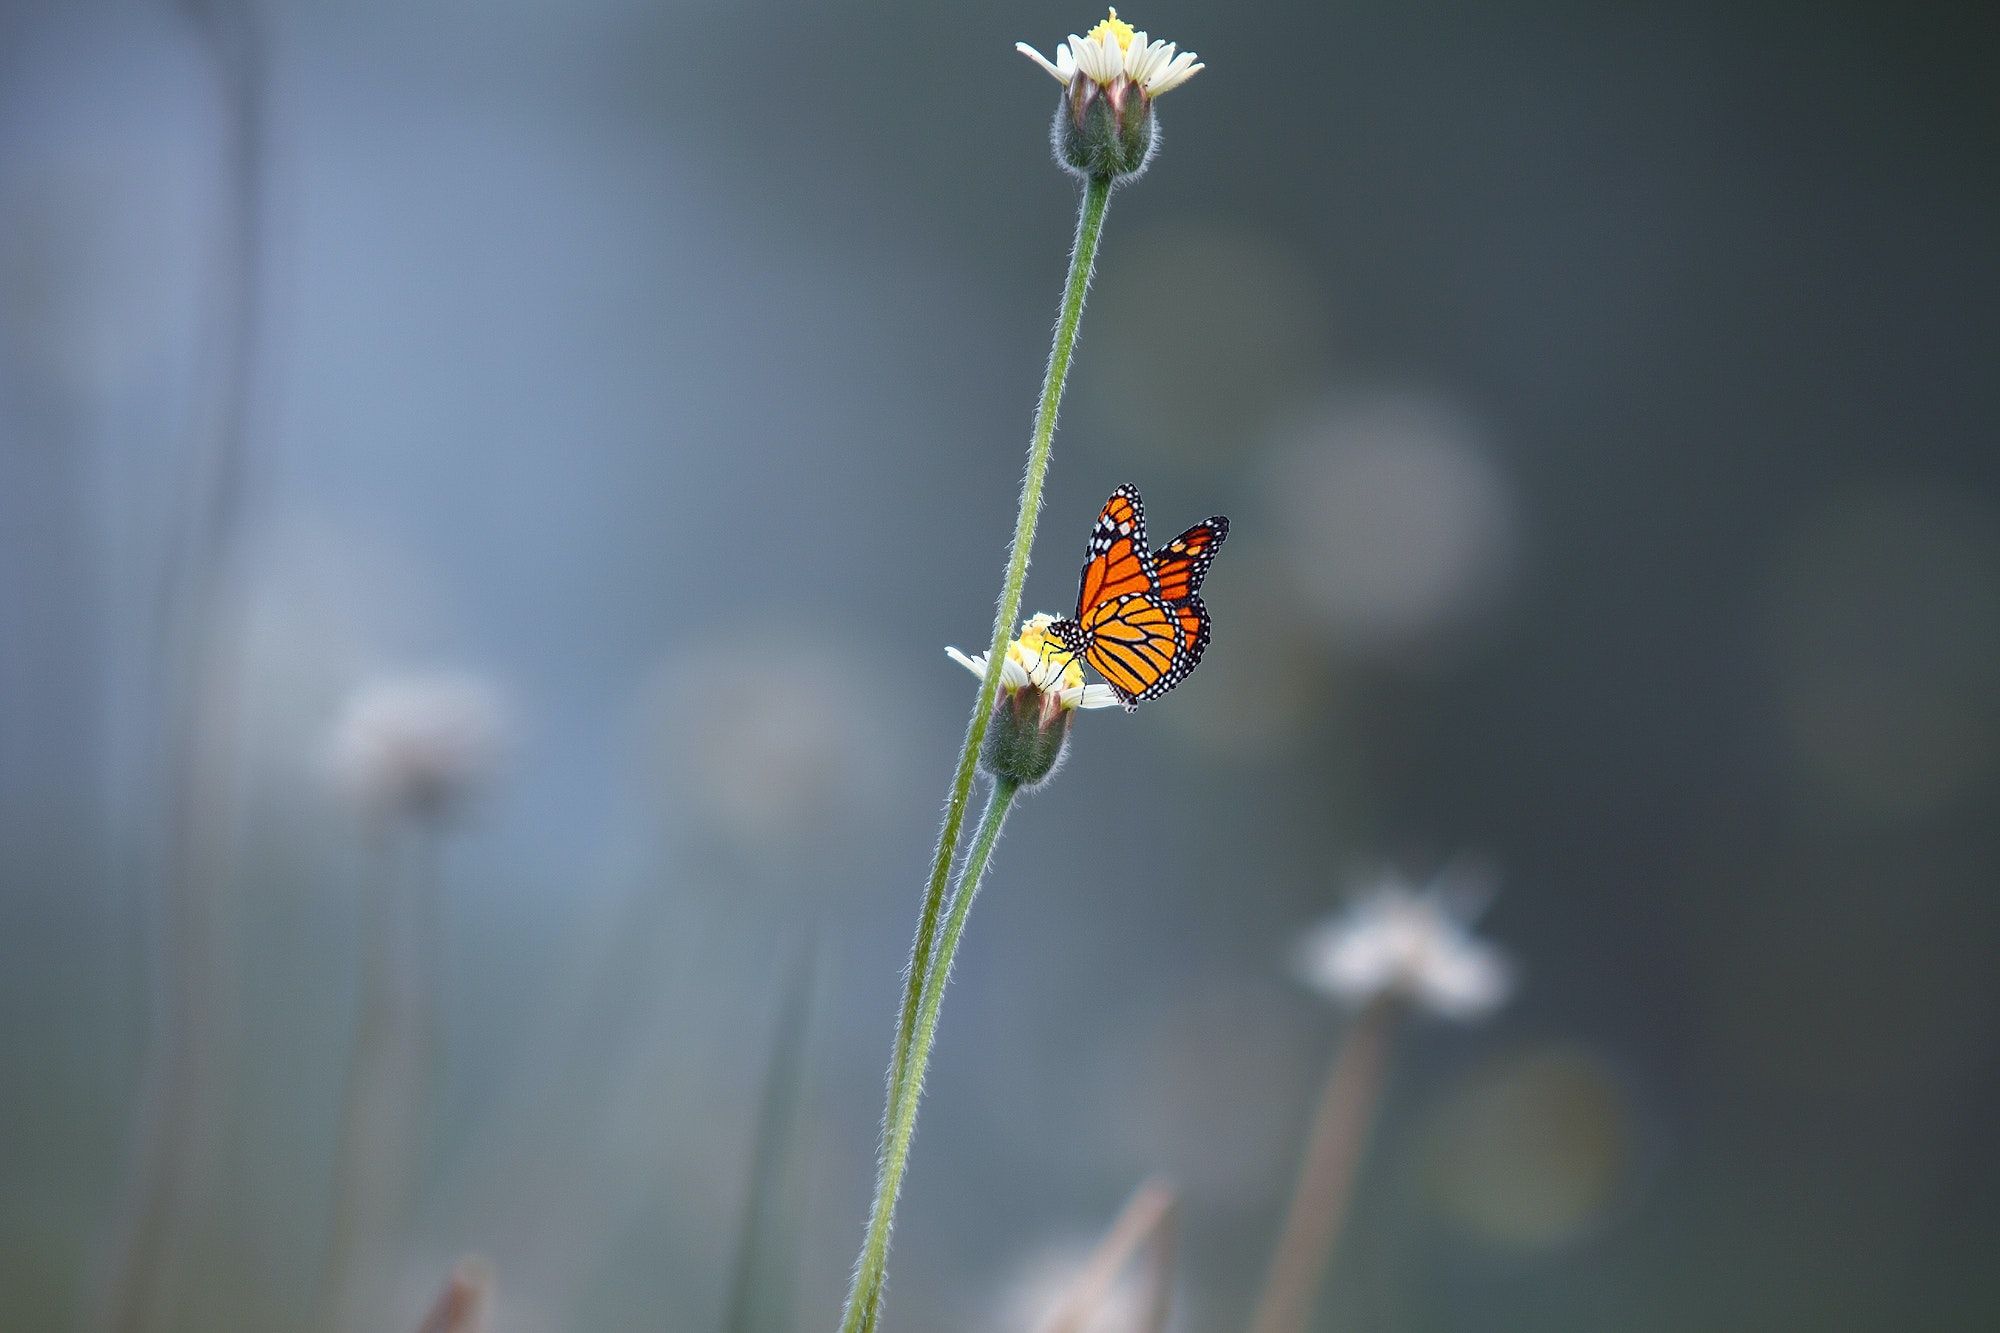 black-and-orange-butterfly-on-white-petal-flower-132184